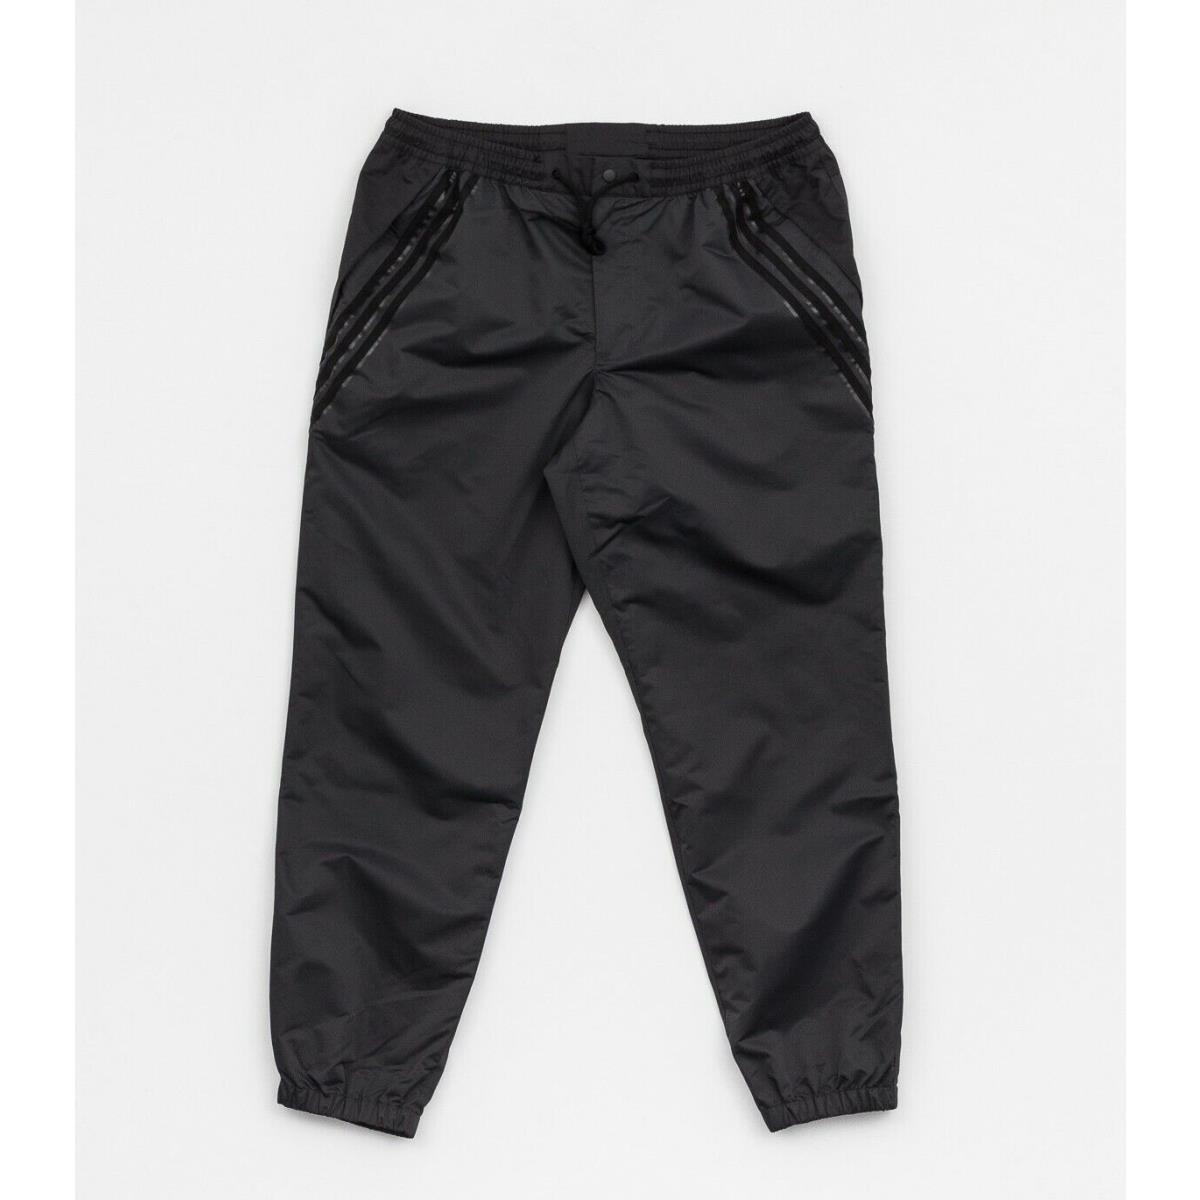 Adidas Men`s Number Athletic Pants - DH6652 - Carbon/black - Large